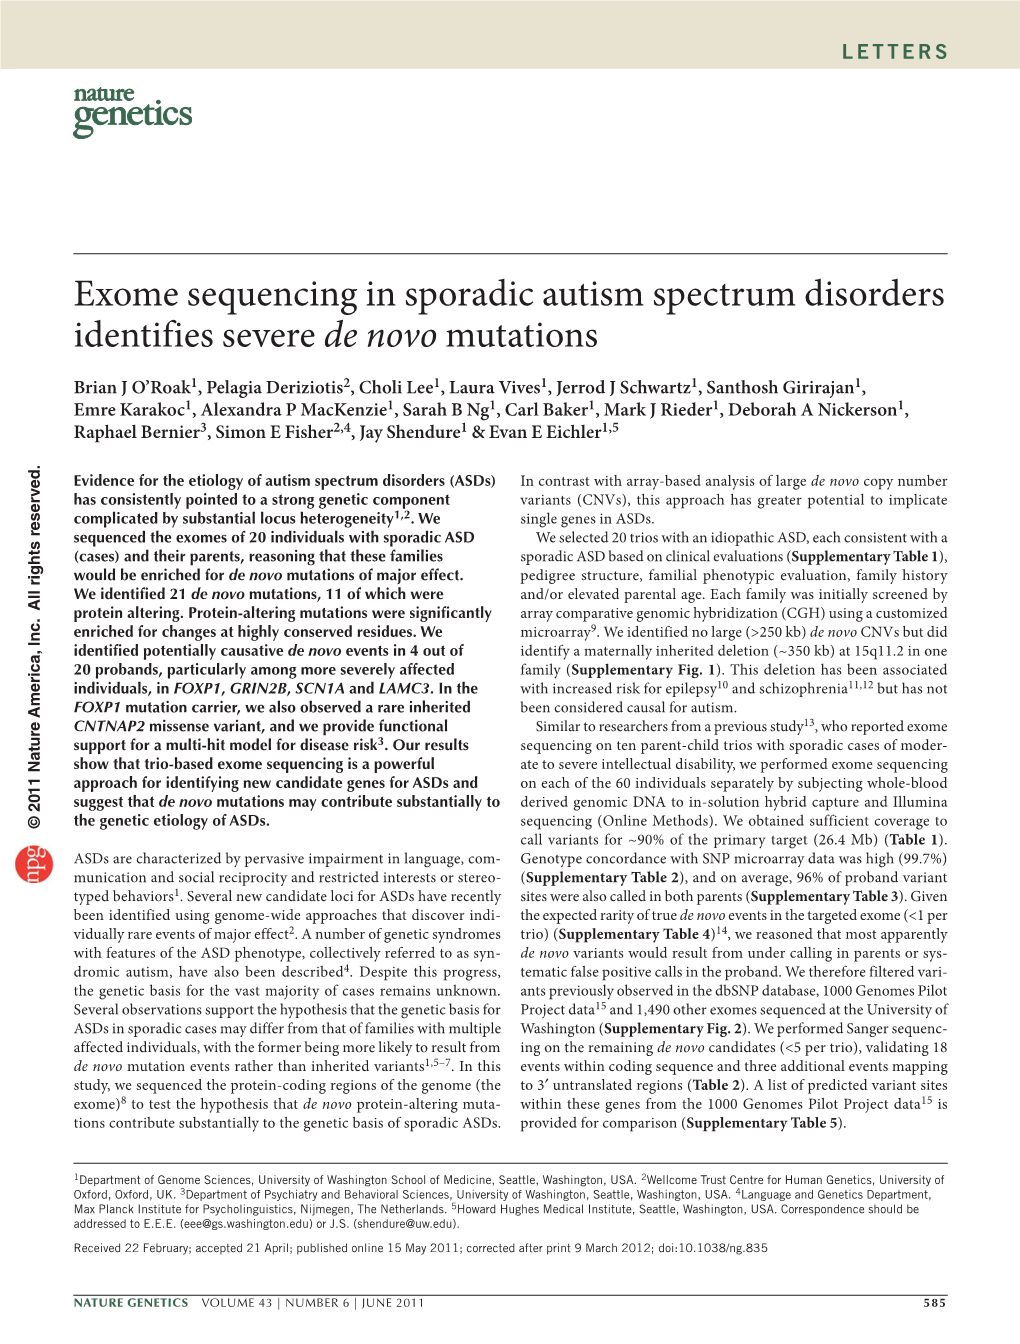 Exome Sequencing in Sporadic Autism Spectrum Disorders Identifies Severe De Novo Mutations